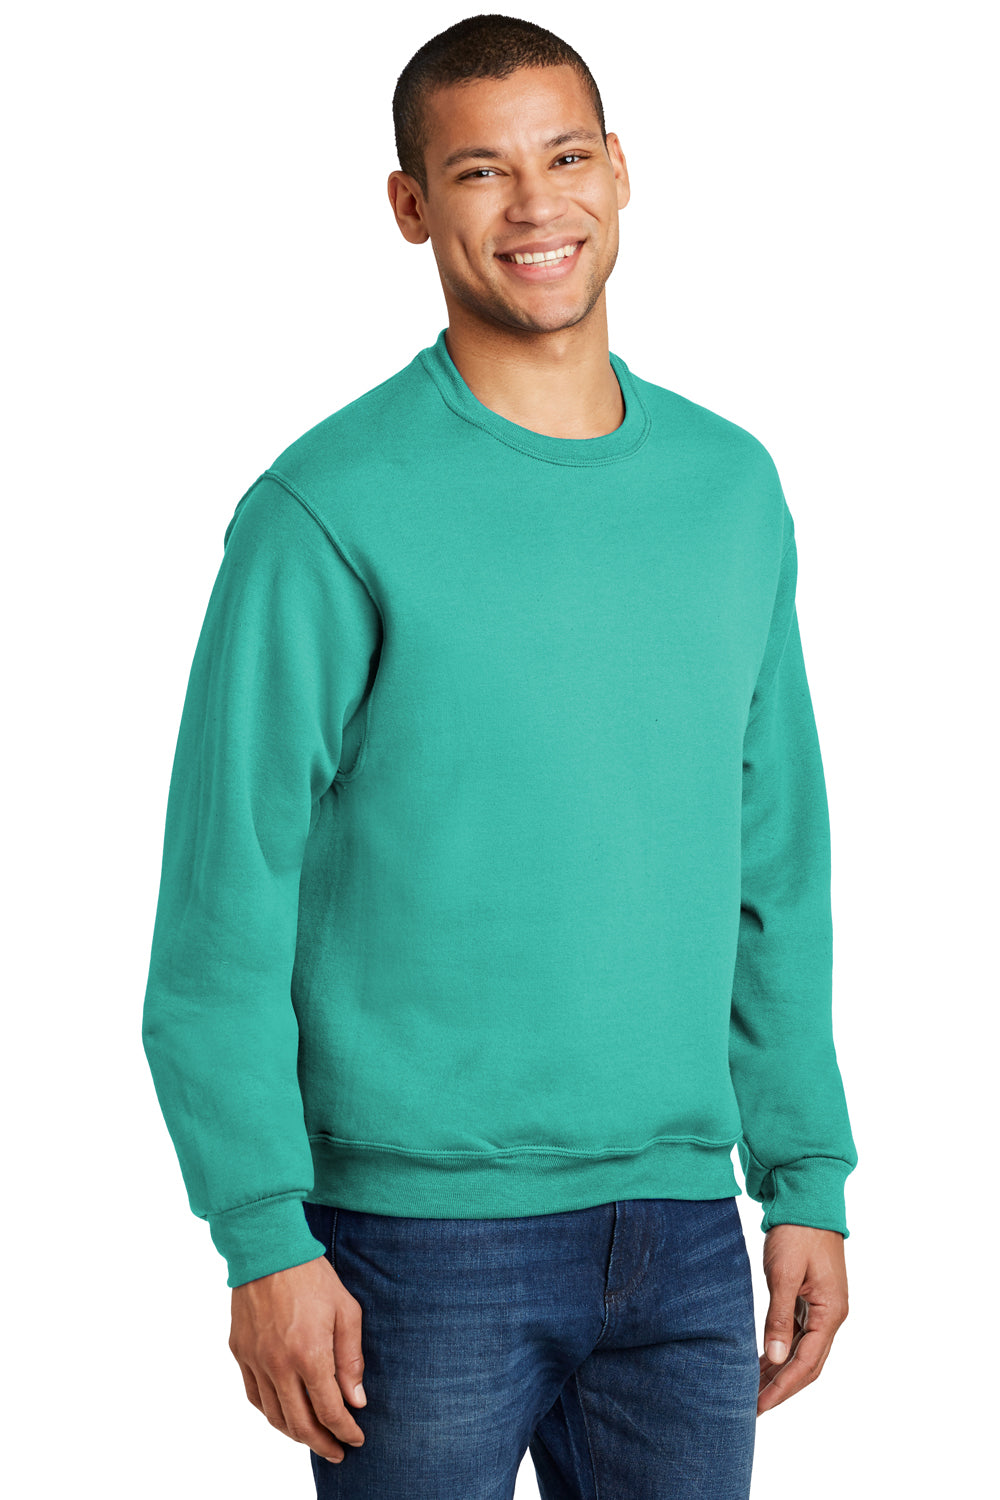 Jerzees 562M/562/562MR Mens NuBlend Fleece Crewneck Sweatshirt Cool Mint 3Q